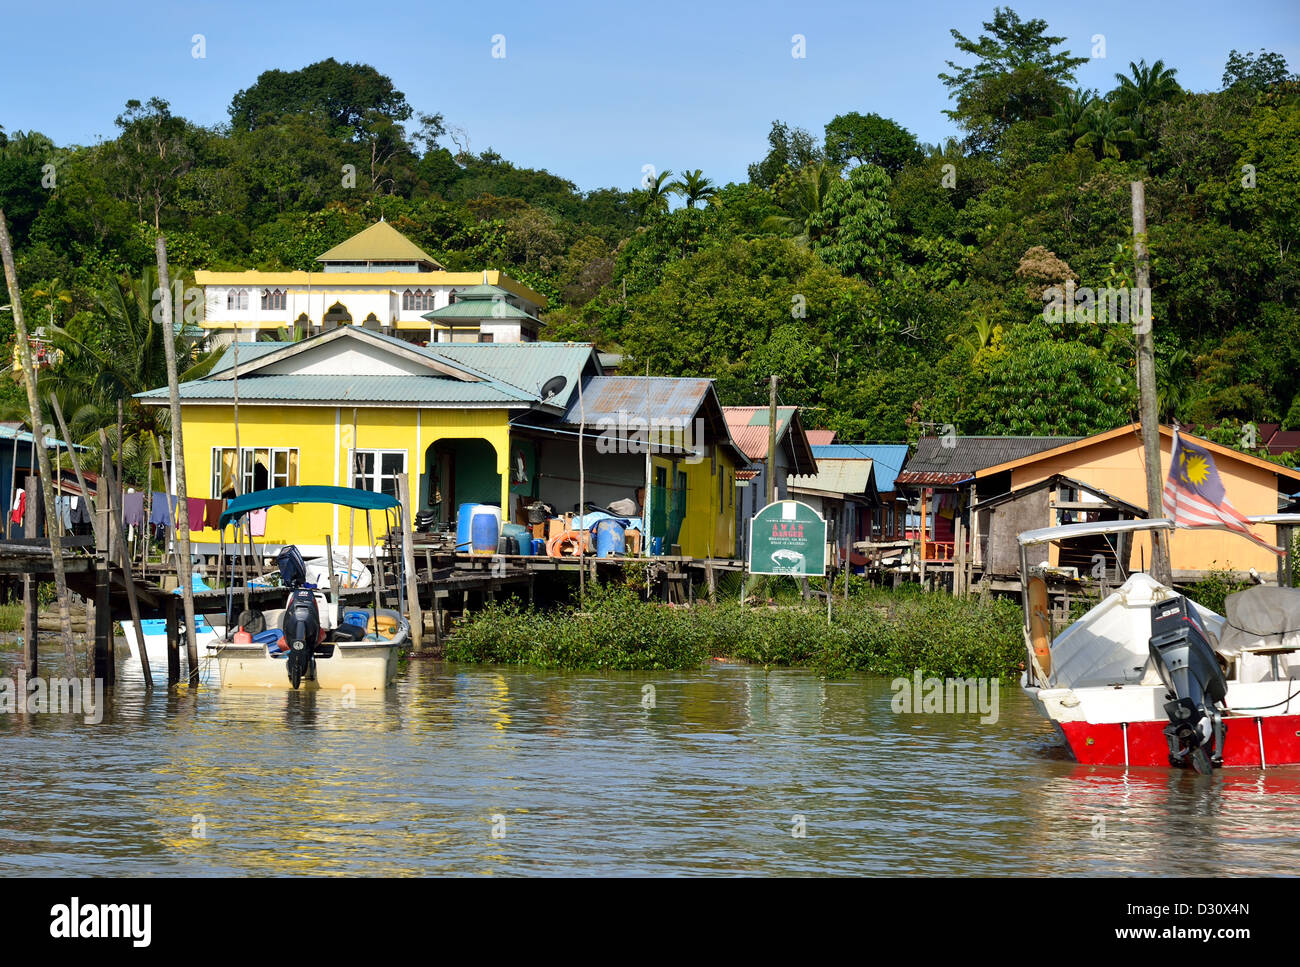 Village and houses along a river. Sarawak, Borneo, Maylaysia. Stock Photo